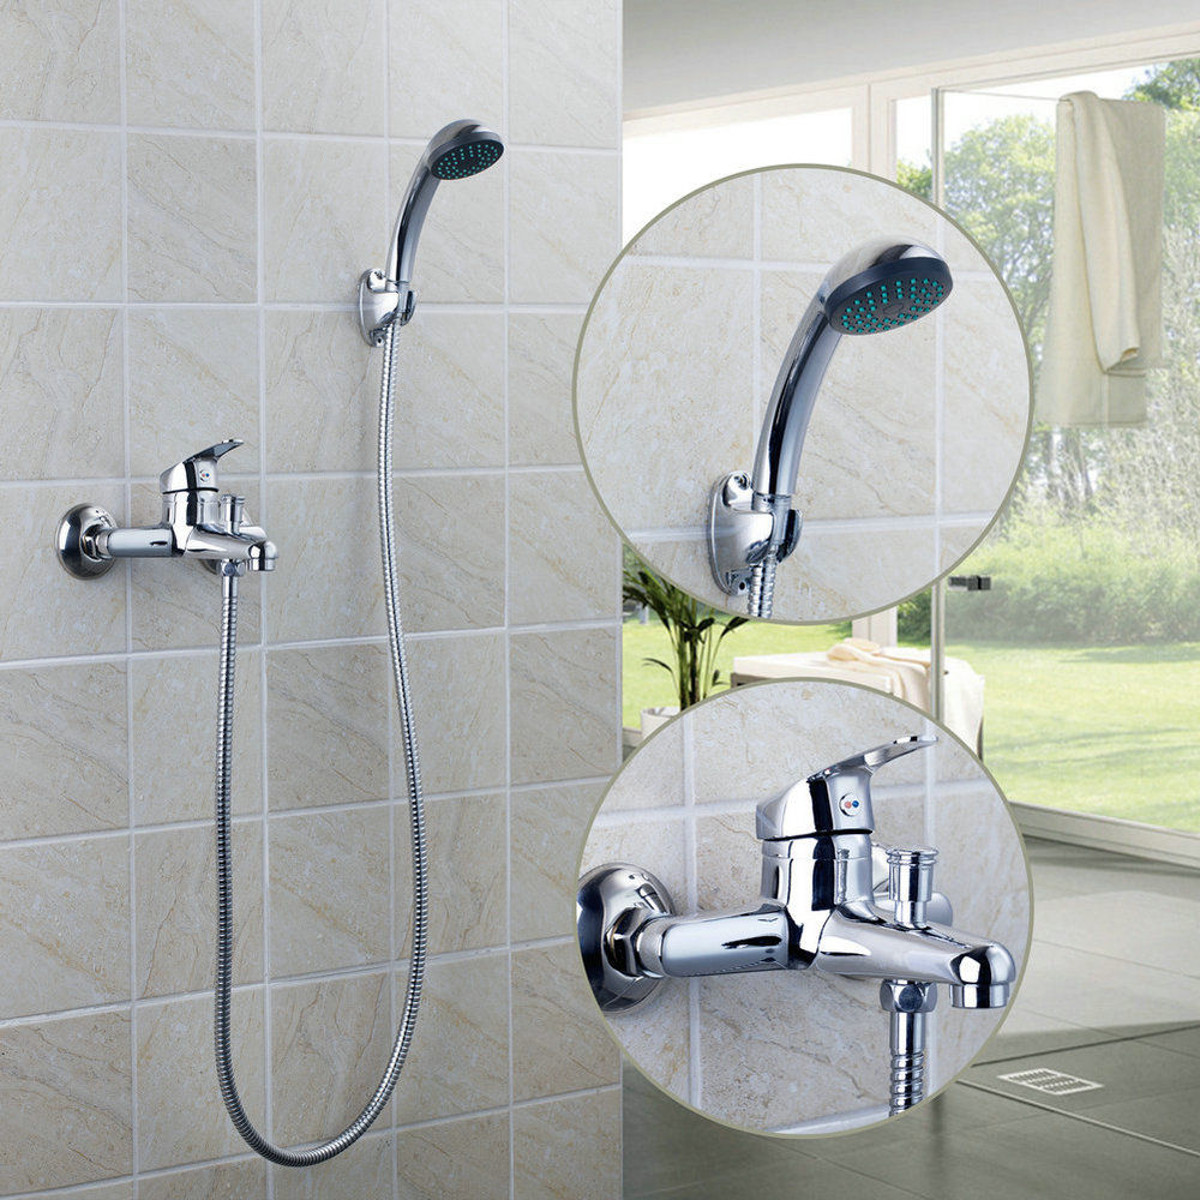 Chrome Wall Mounted Bathroom Bathtub, How To Change A Bathtub Shower Faucet